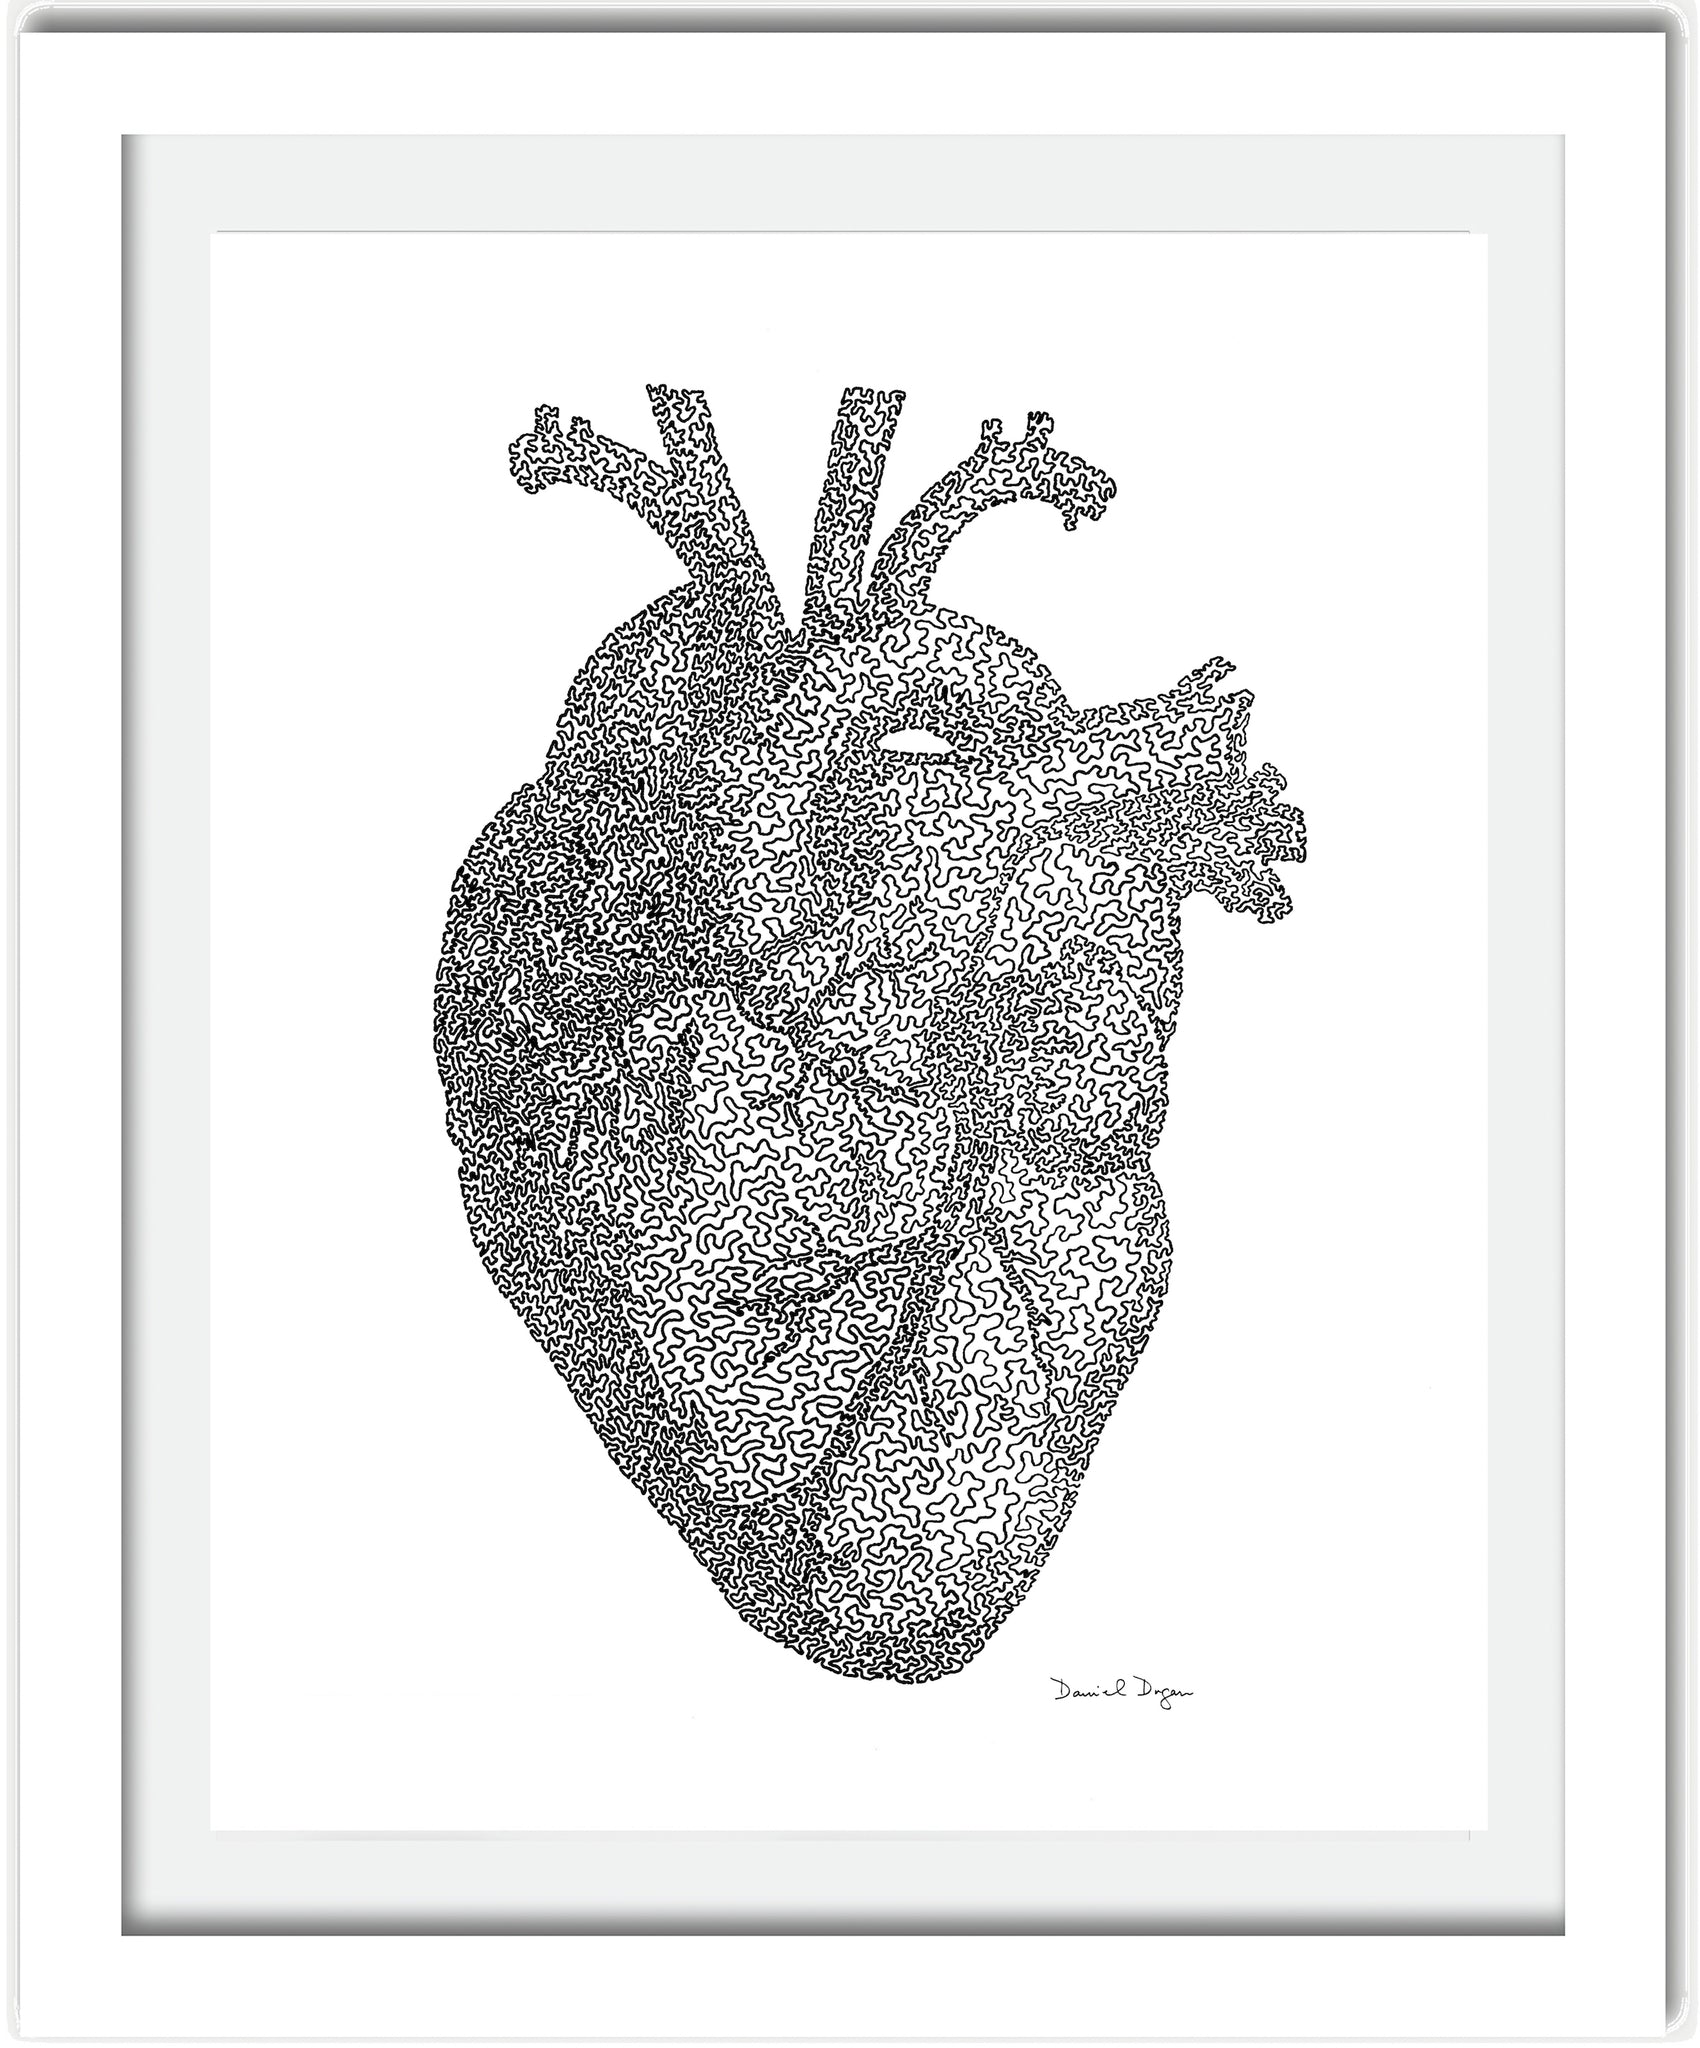 Daniel Dugan, "Heart Study"